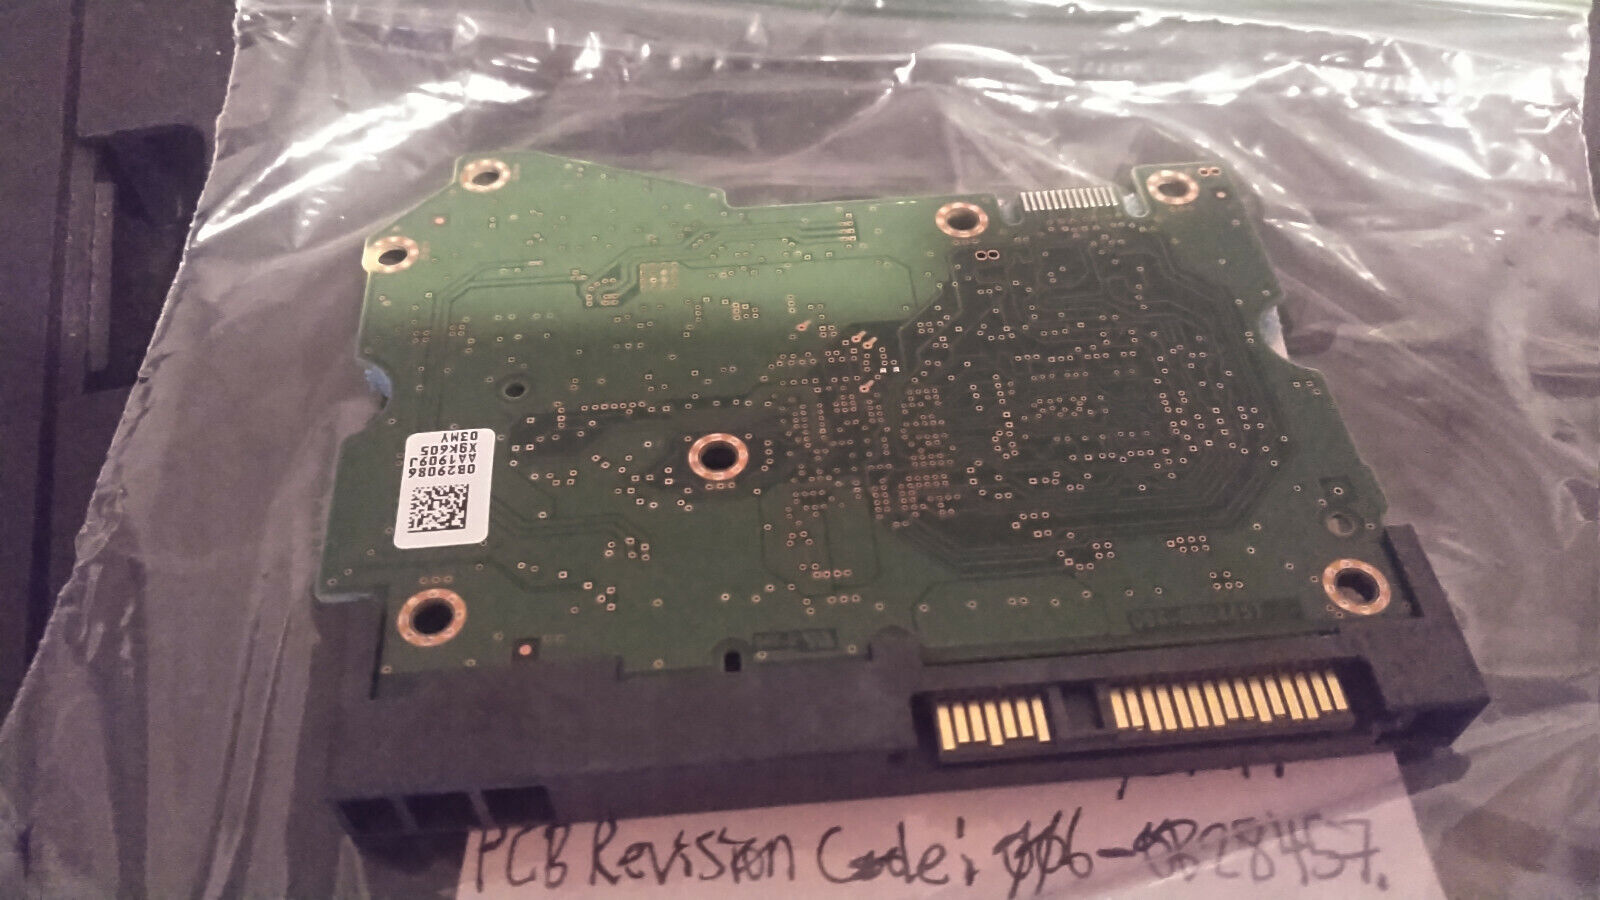 {HGST} HUS724030ALS640 3TB SAS HDD PCB with Screws